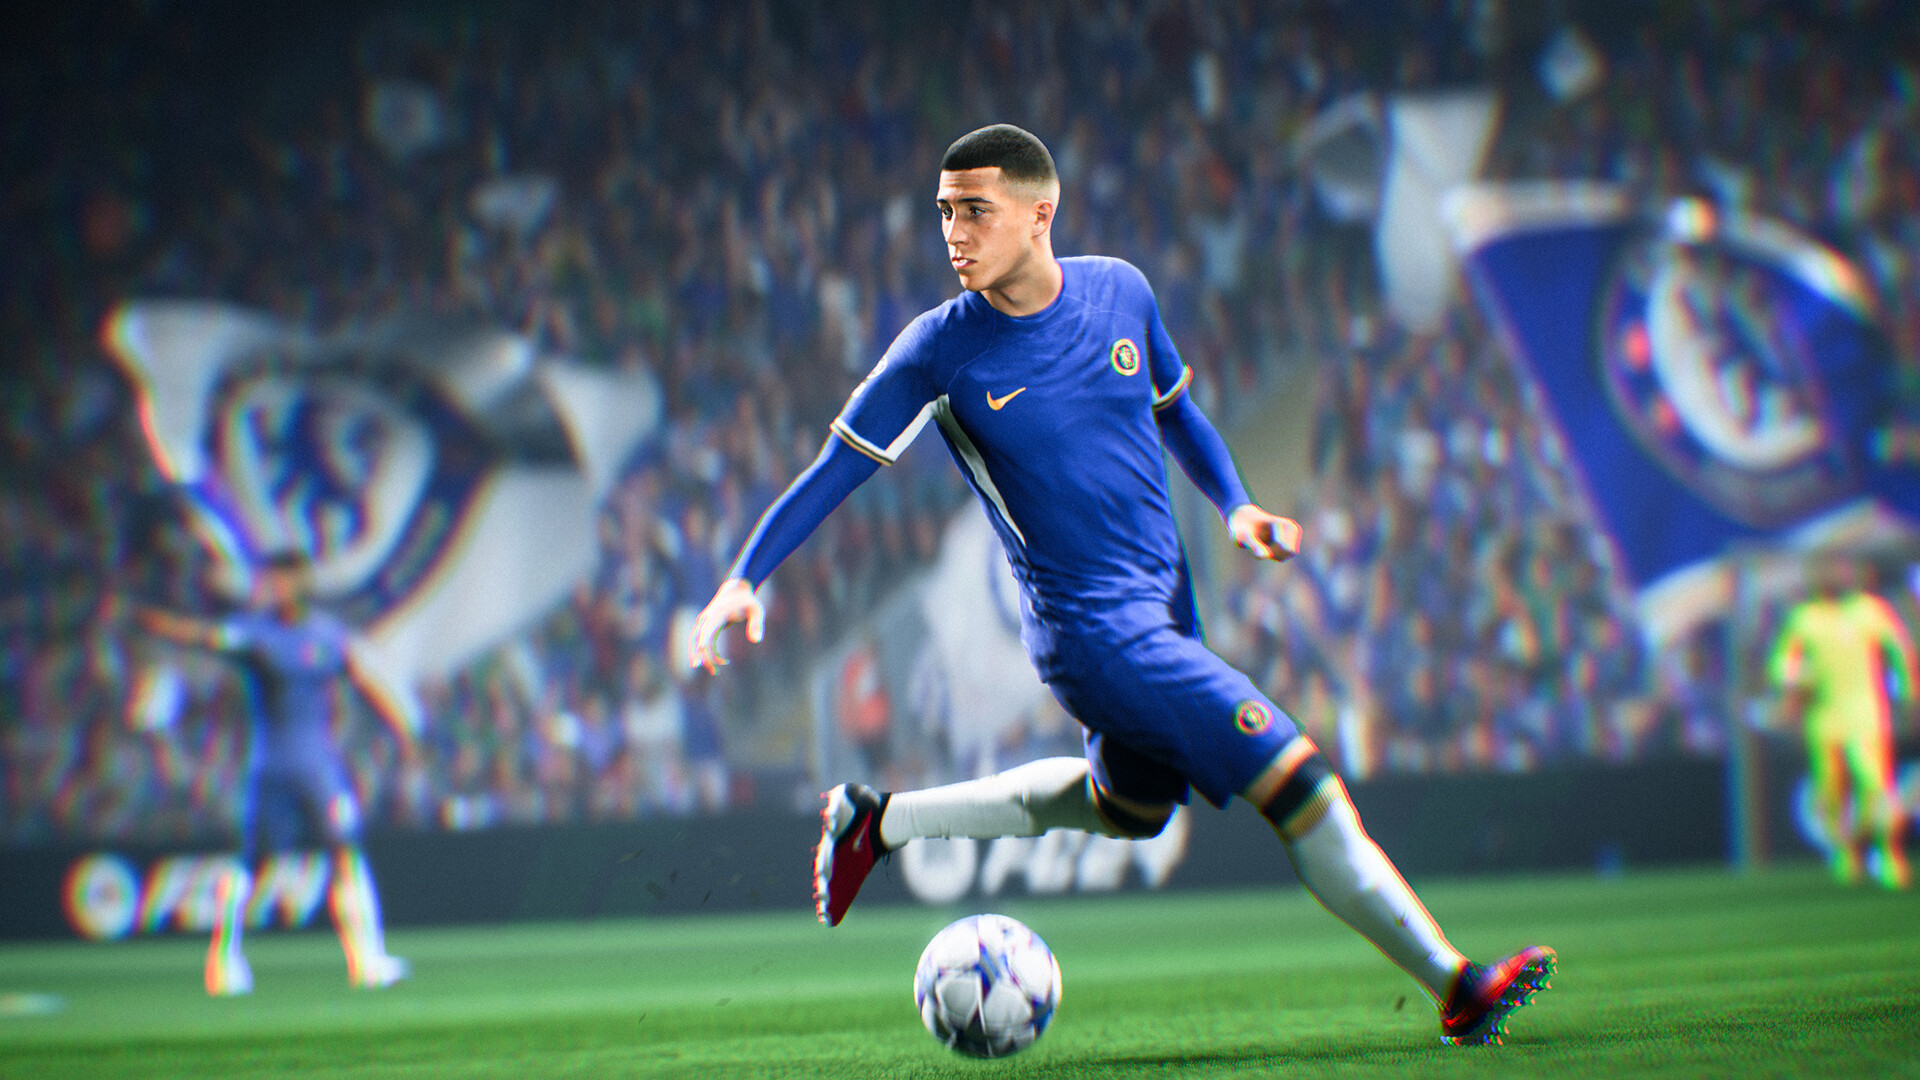 EA SPORTS™ FIFA 23 Screenshots · SteamDB